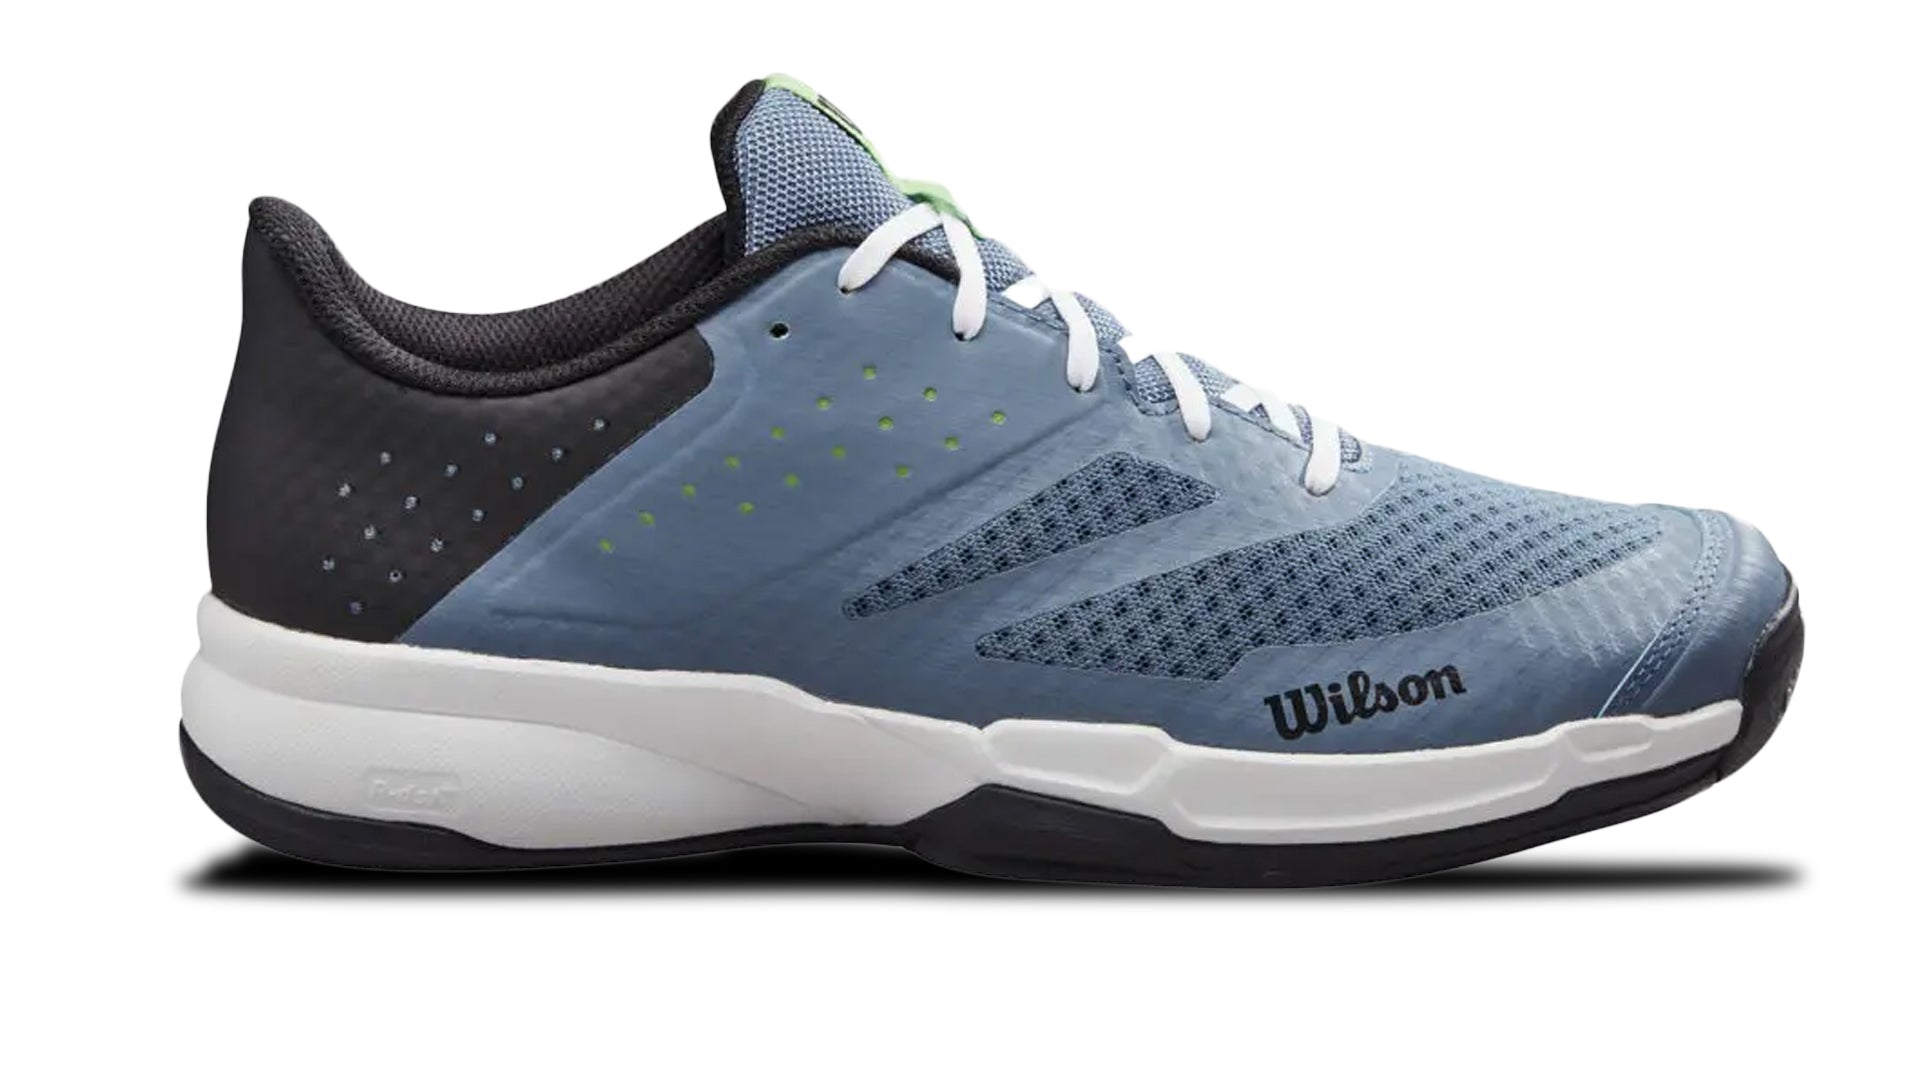 Wilson Men's Kaos Stroke 2.0 Tennis Shoes in China Blue/Black